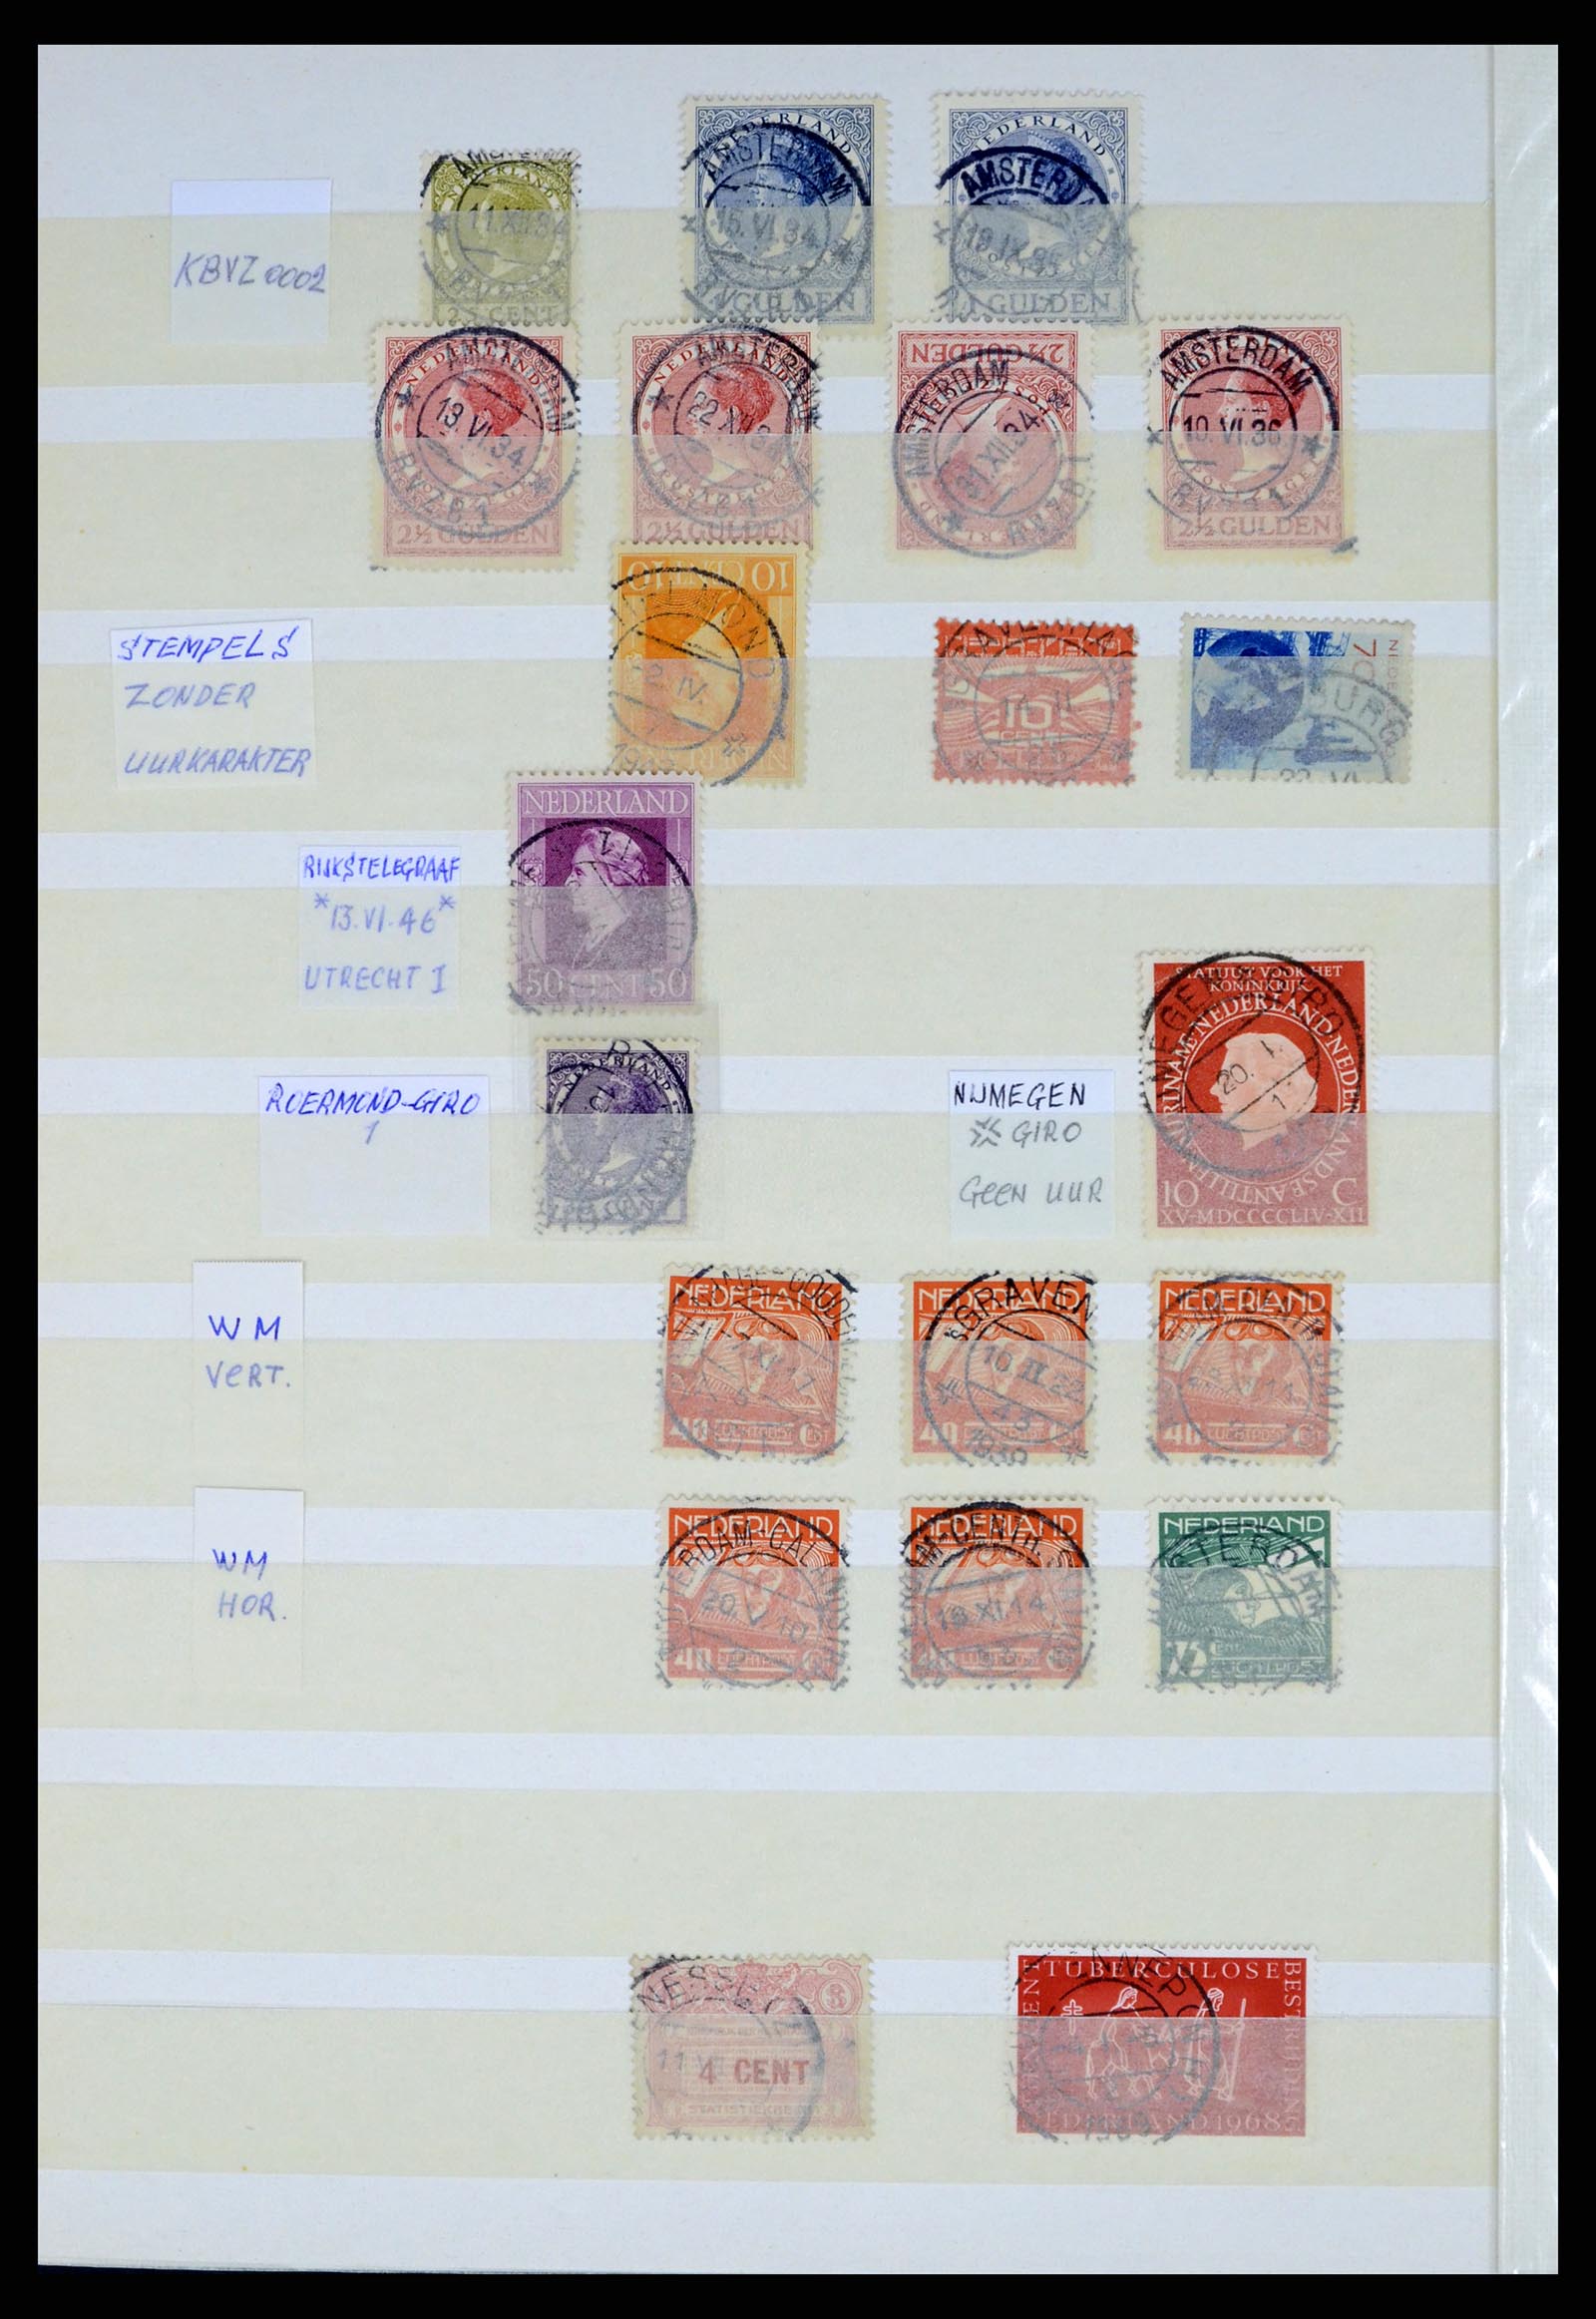 37424 062 - Stamp collection 37424 Netherlands shortbar cancels.